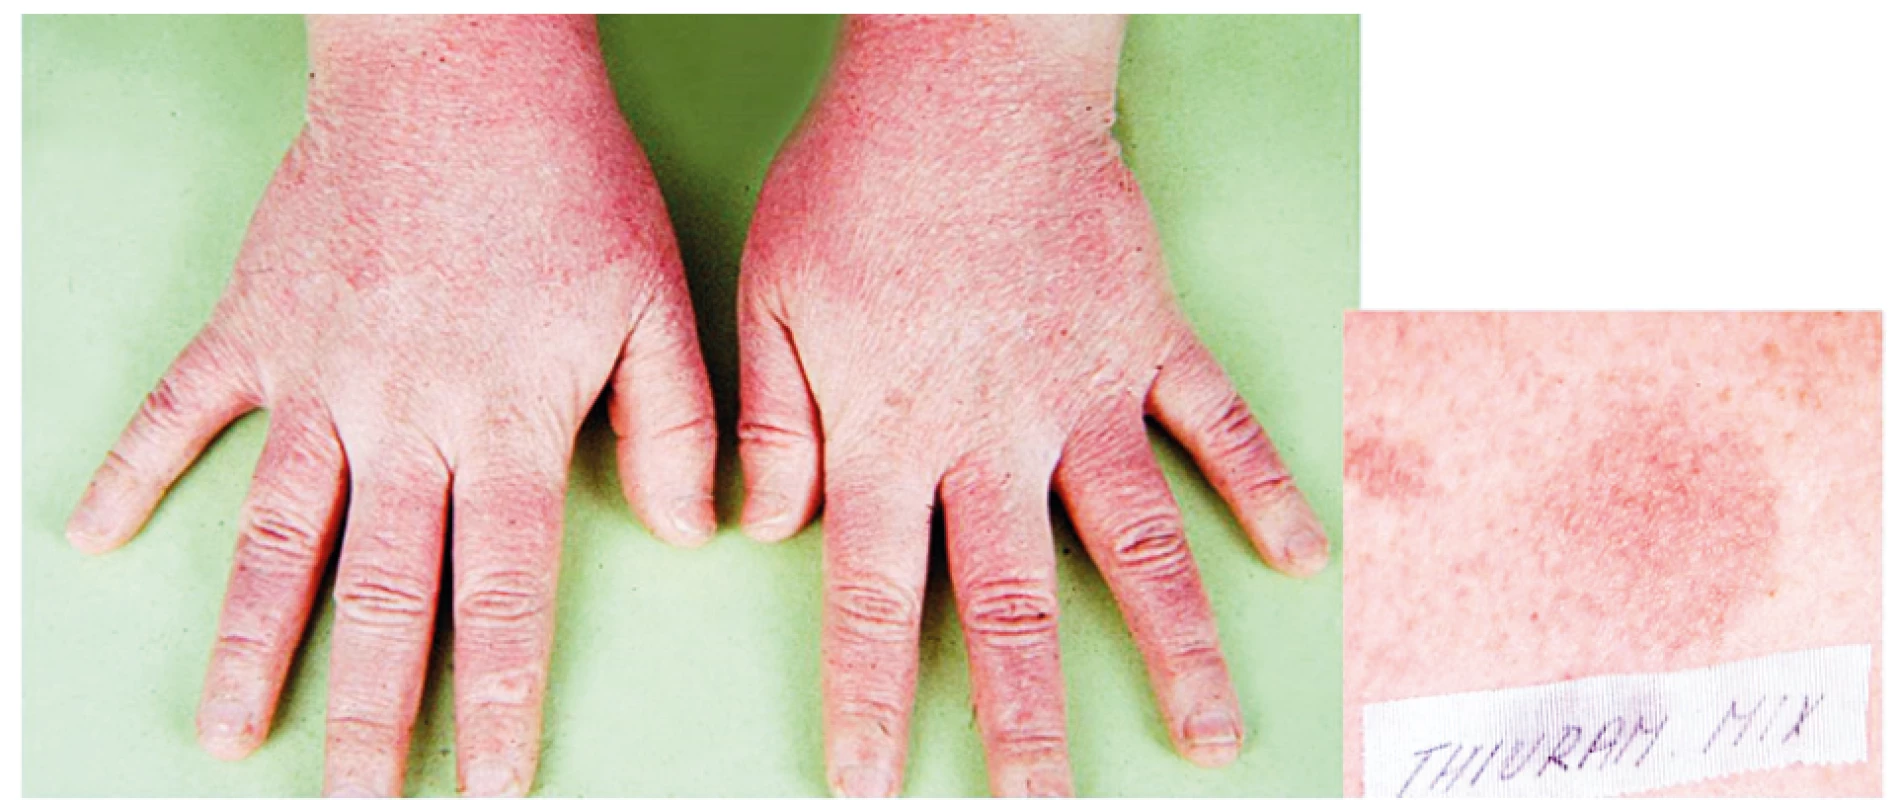 Eczema contactum prof. – guma rukavic – Thiuram-mix – pomocnice ve zdravotnictví